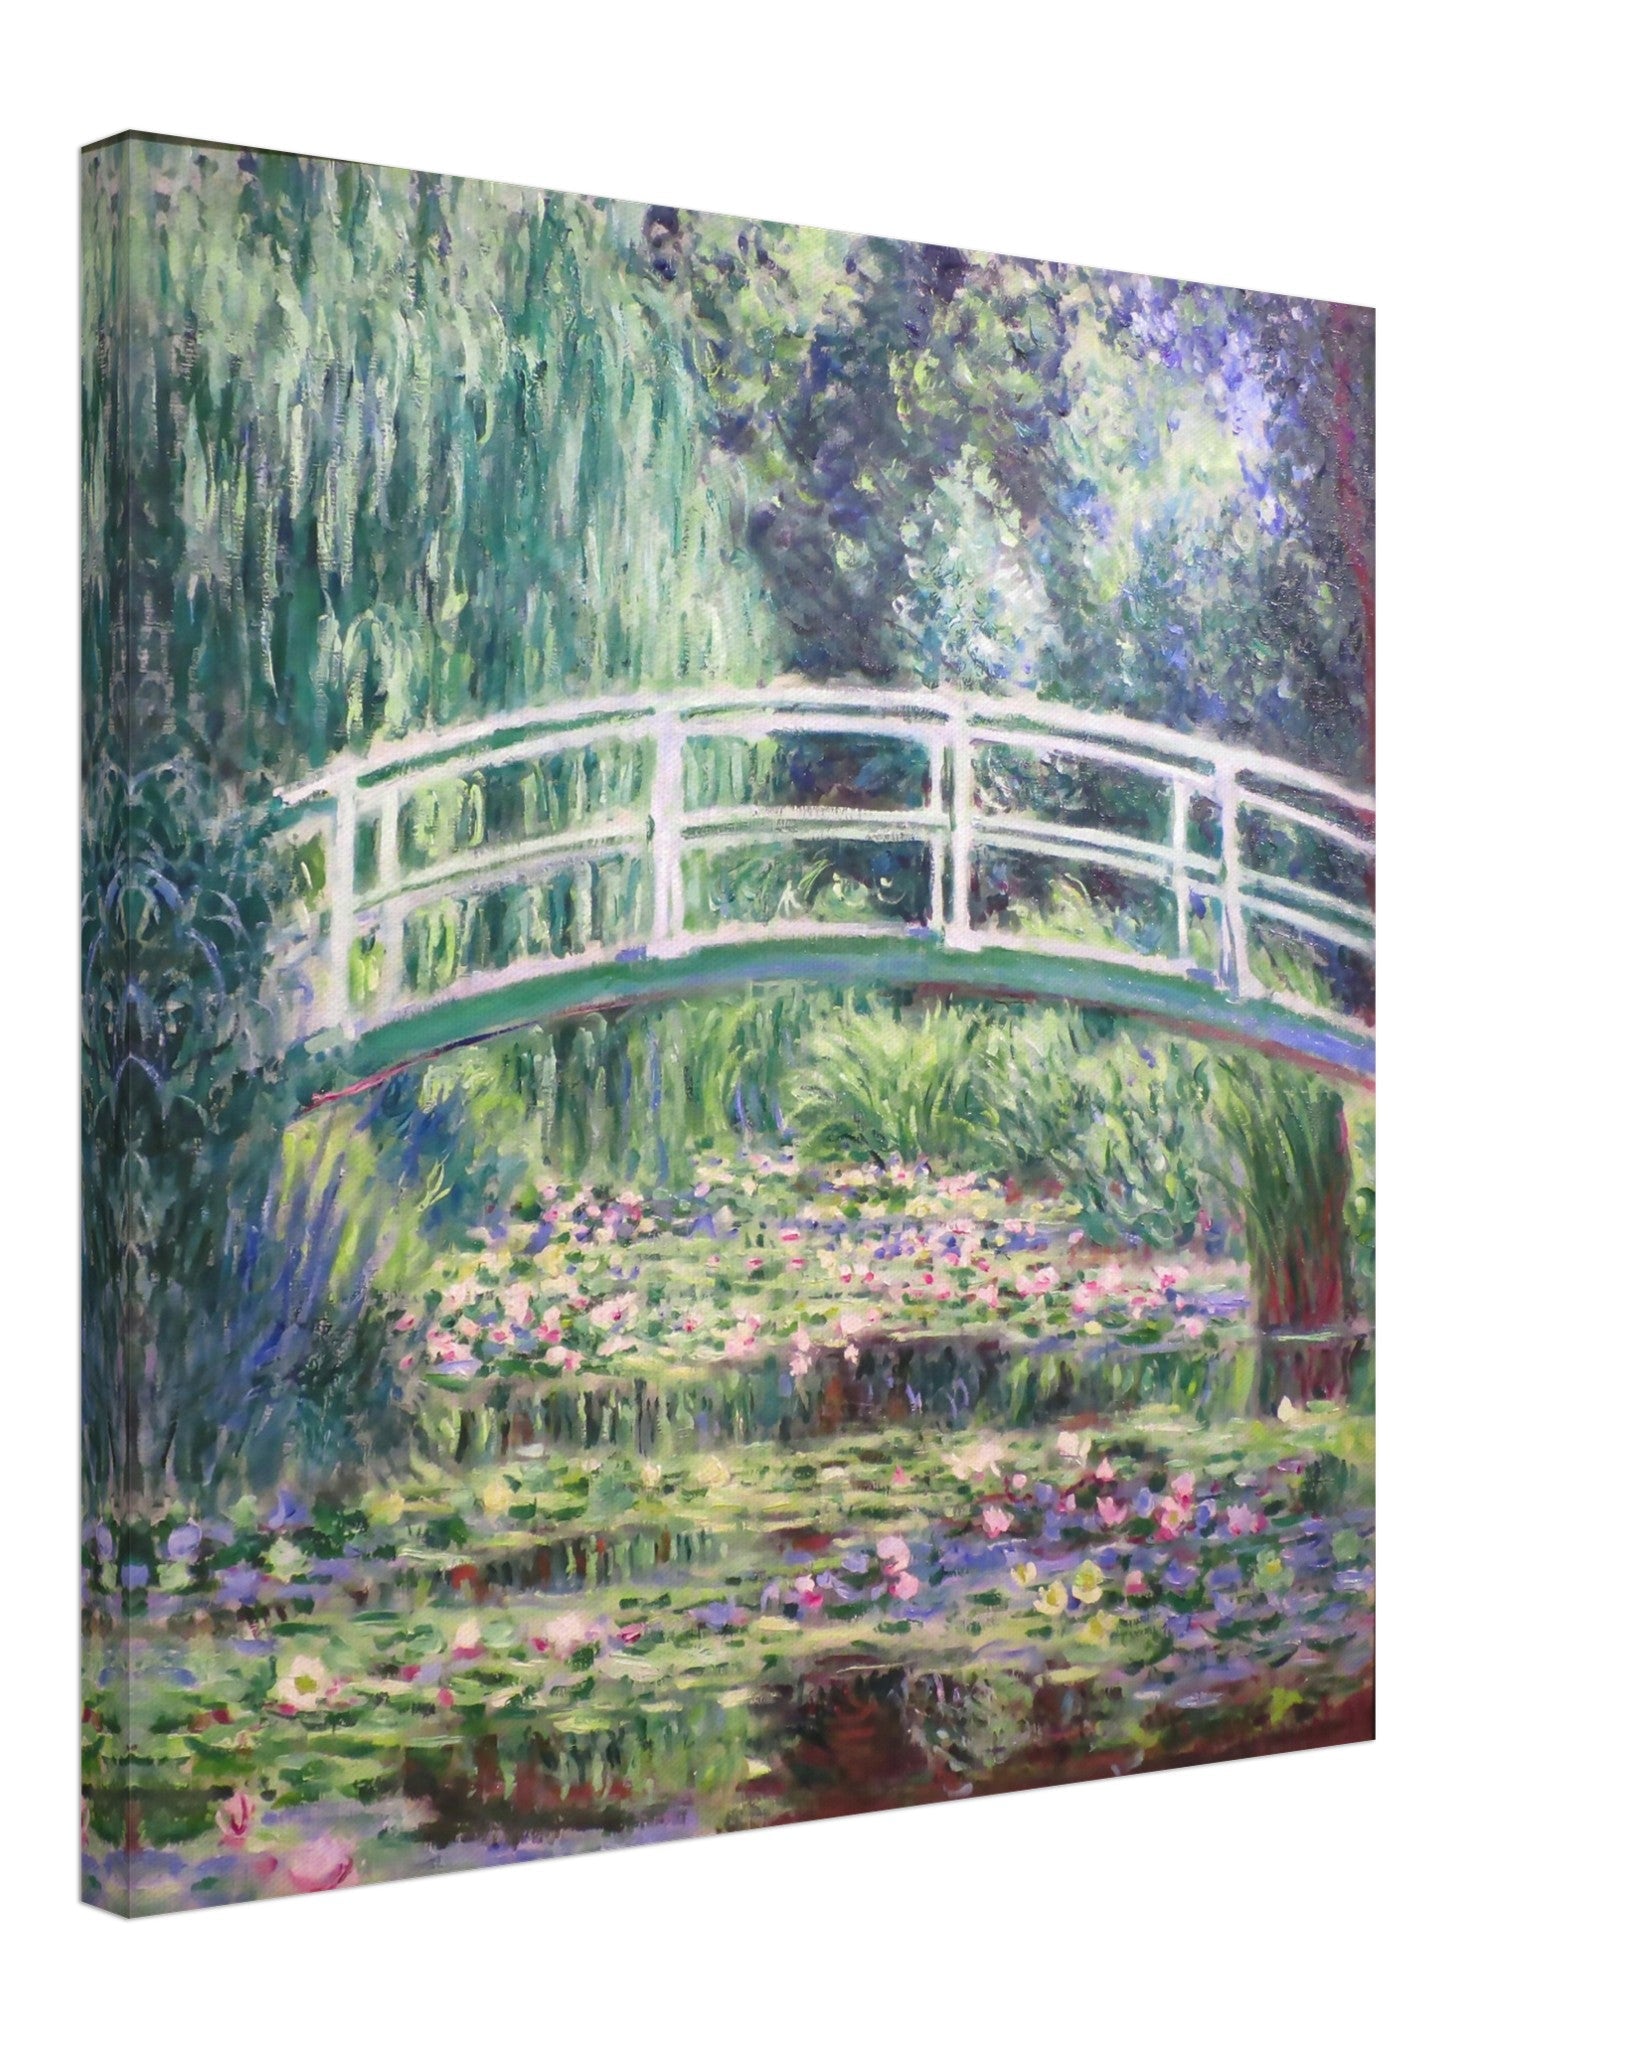 Water Lily Pond Canvas Print, Japanese Bridge Over A Pond Of Water Lilies - Water Lily Pond Print - Claude Monet - WallArtPrints4U